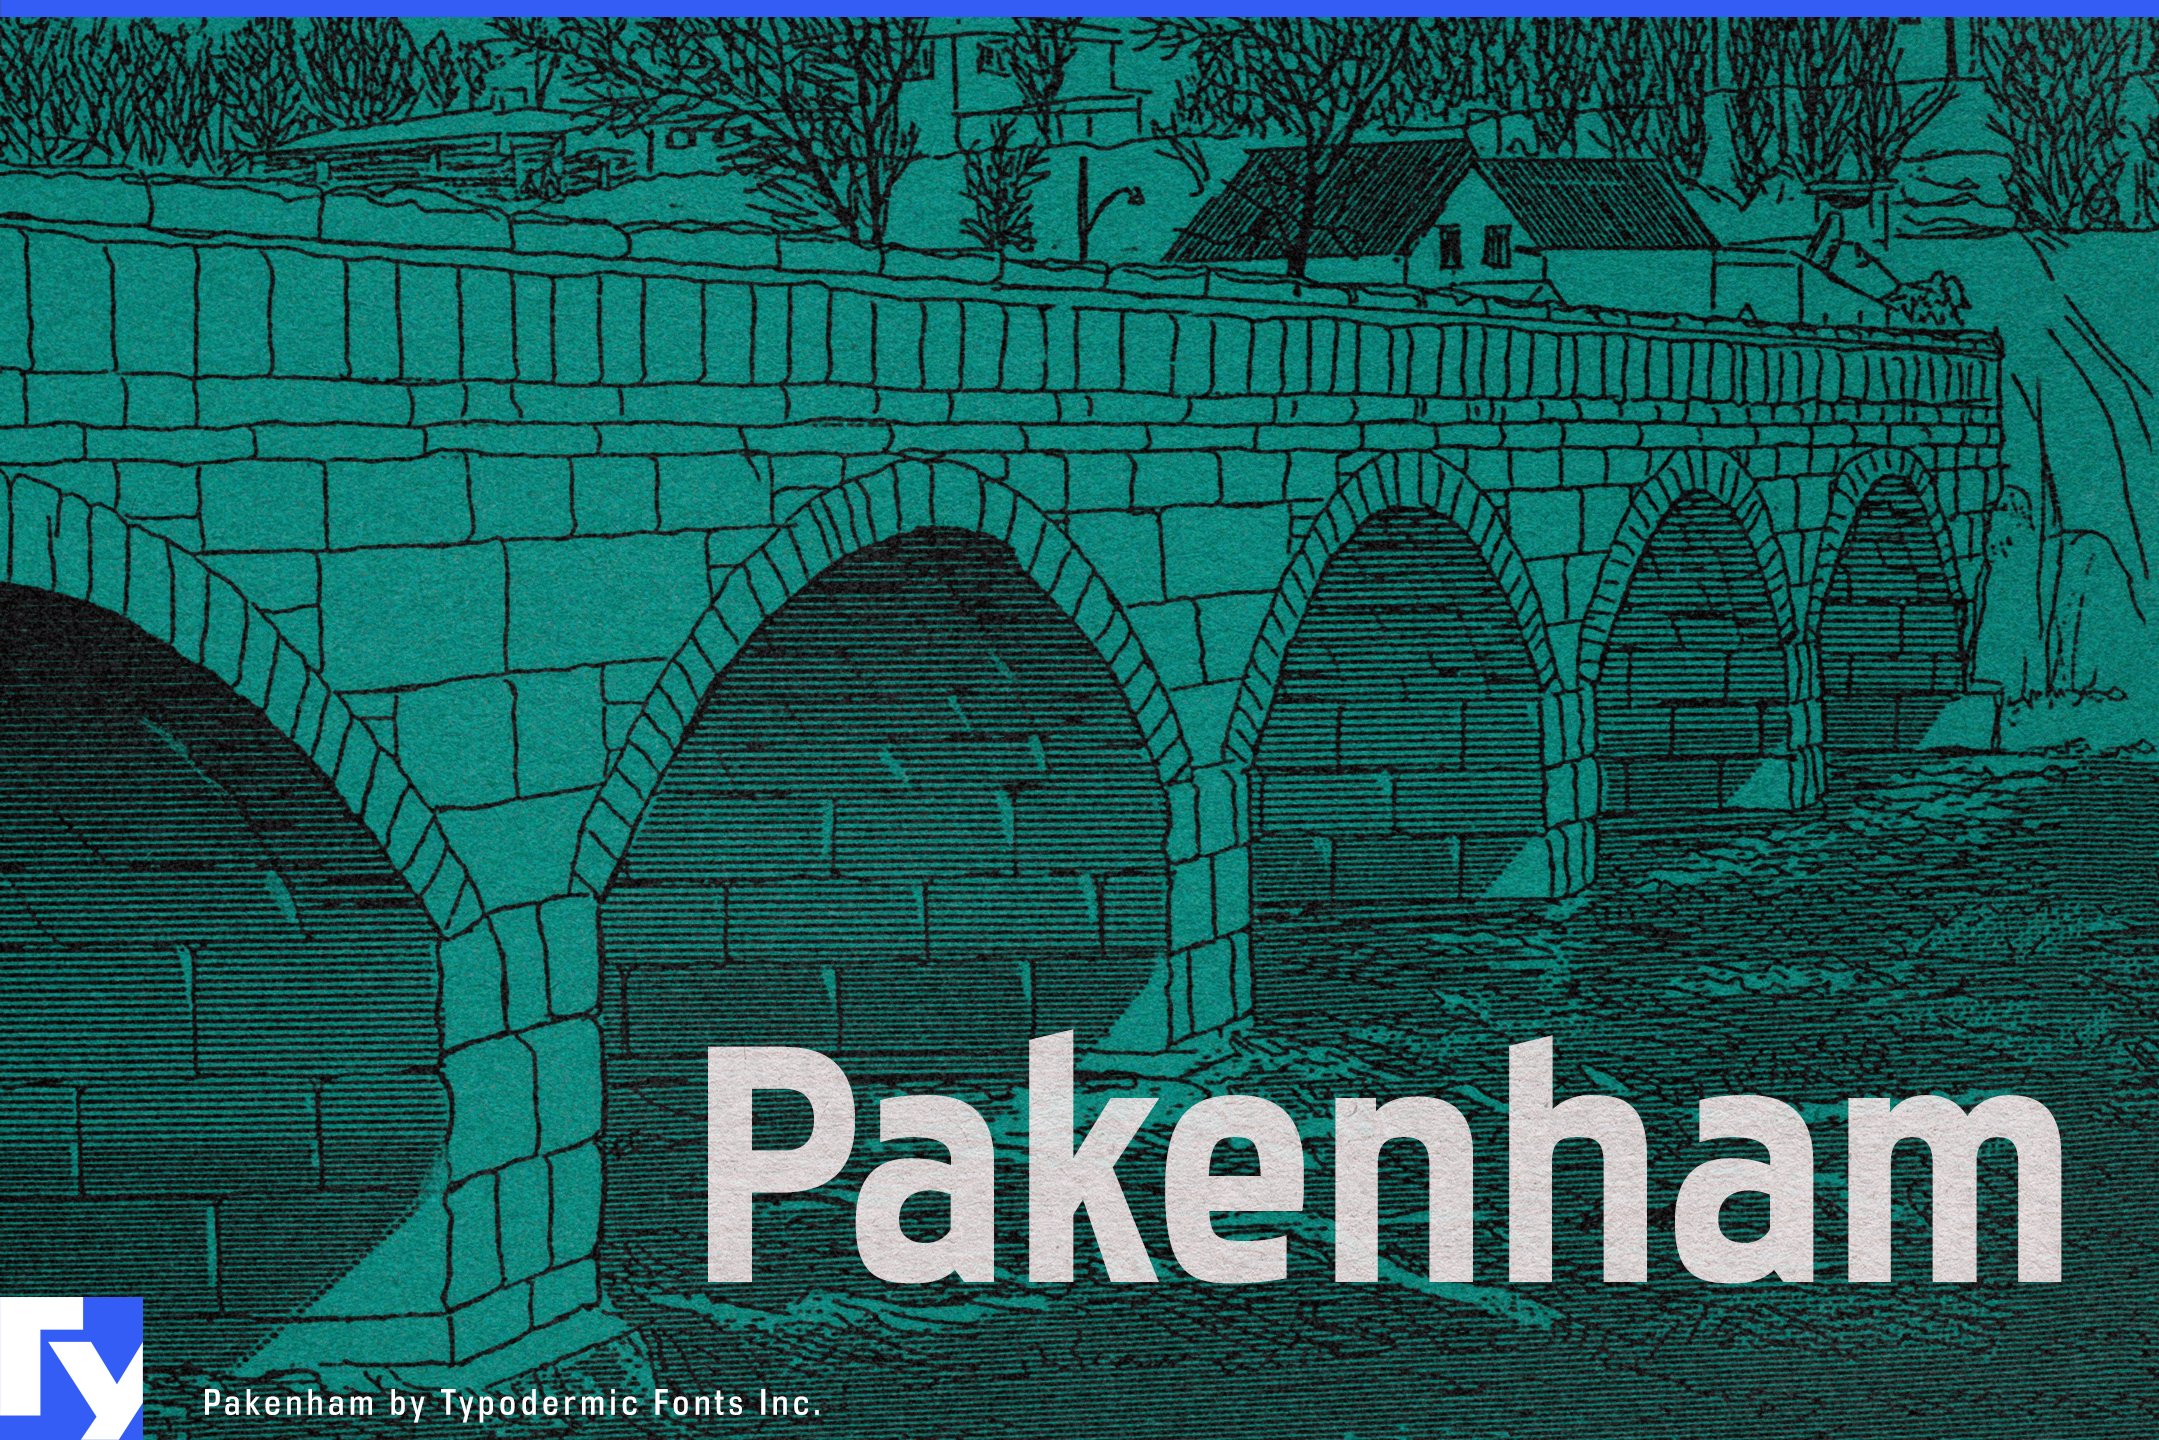 Pakenham cover image.